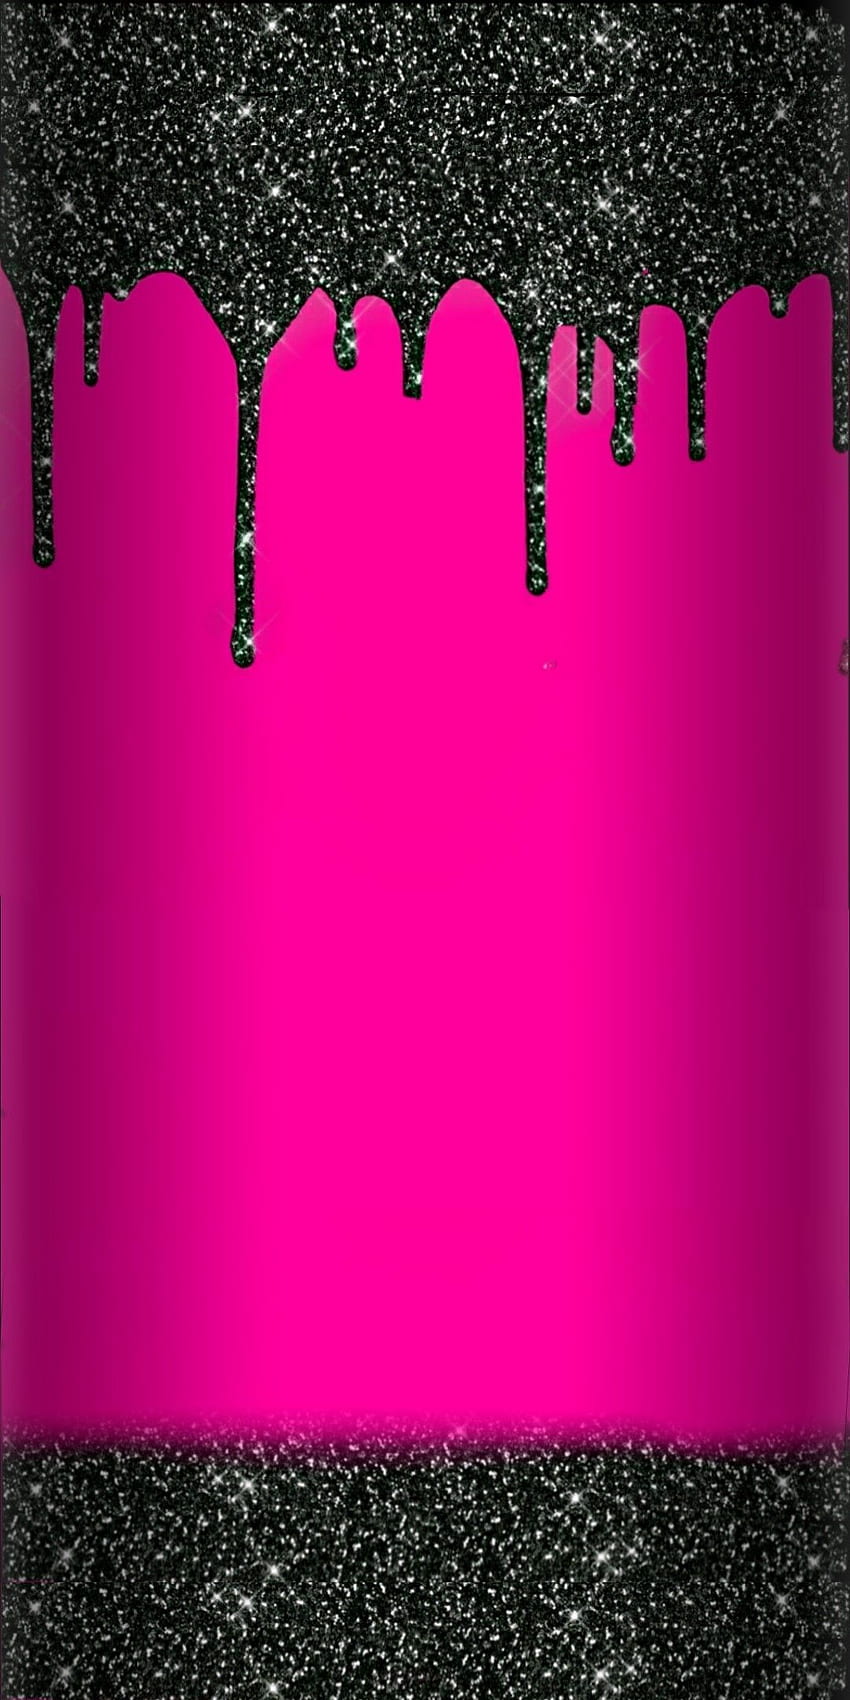 1366x768px, 720P Free download | Hot pink & black glitter drip. Pink ...